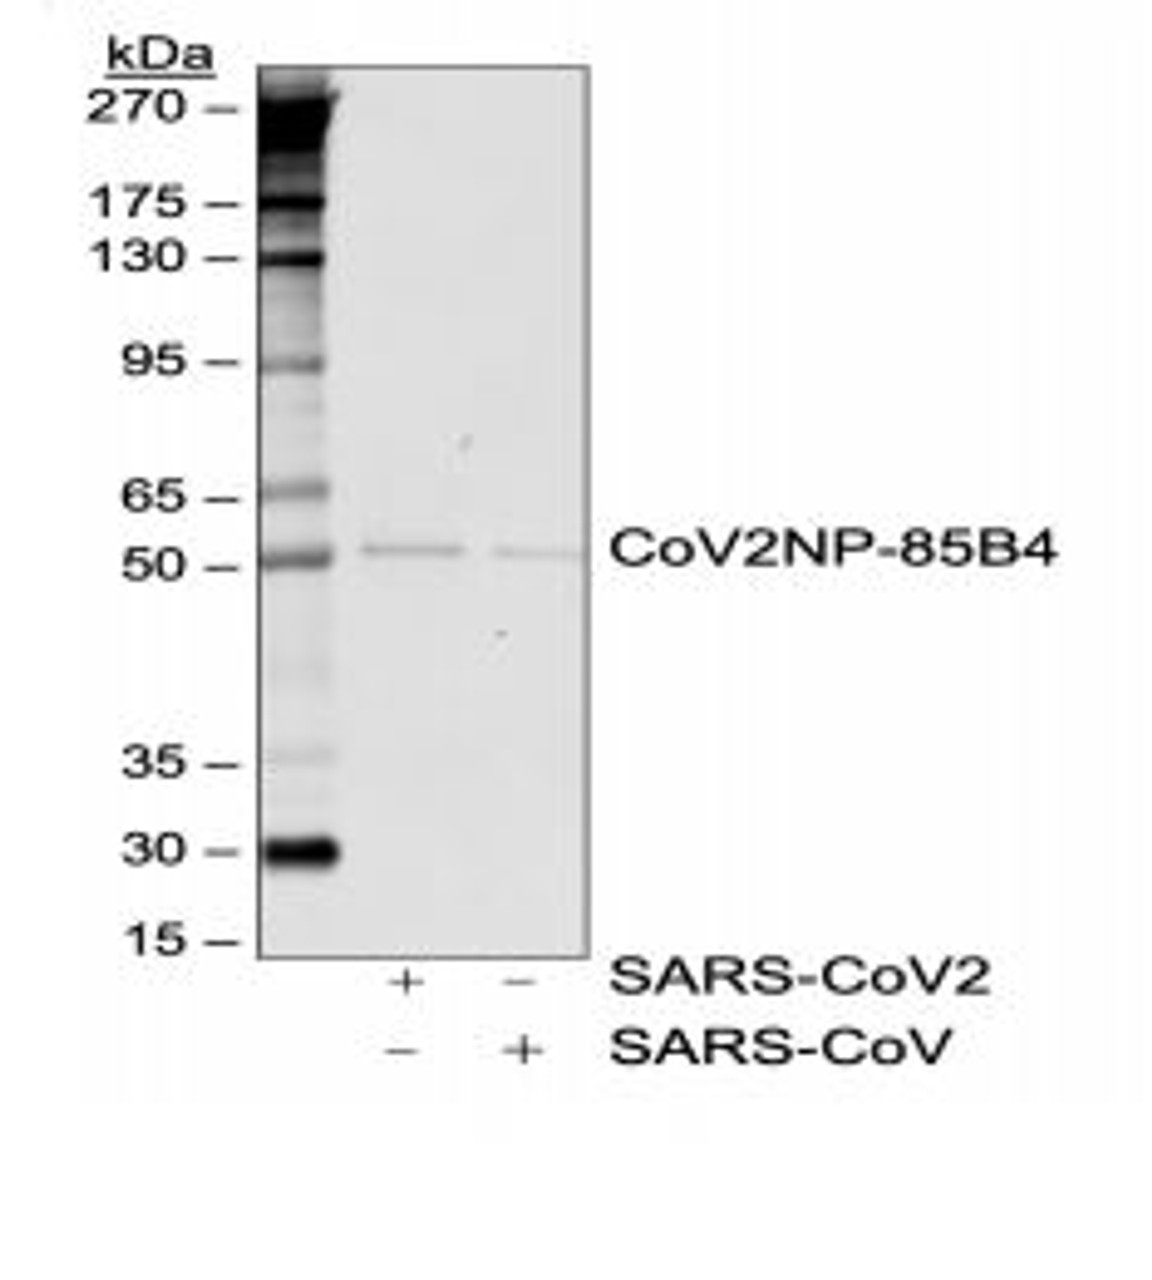 Western blot analysis of SARS-CoV2 and SARS-CoV nucleocapsid protein (50 ng) probed with 1 ug/mL CoV2NP rabbit monoclonal antibody (85B4) , CoV2NP-85B4.